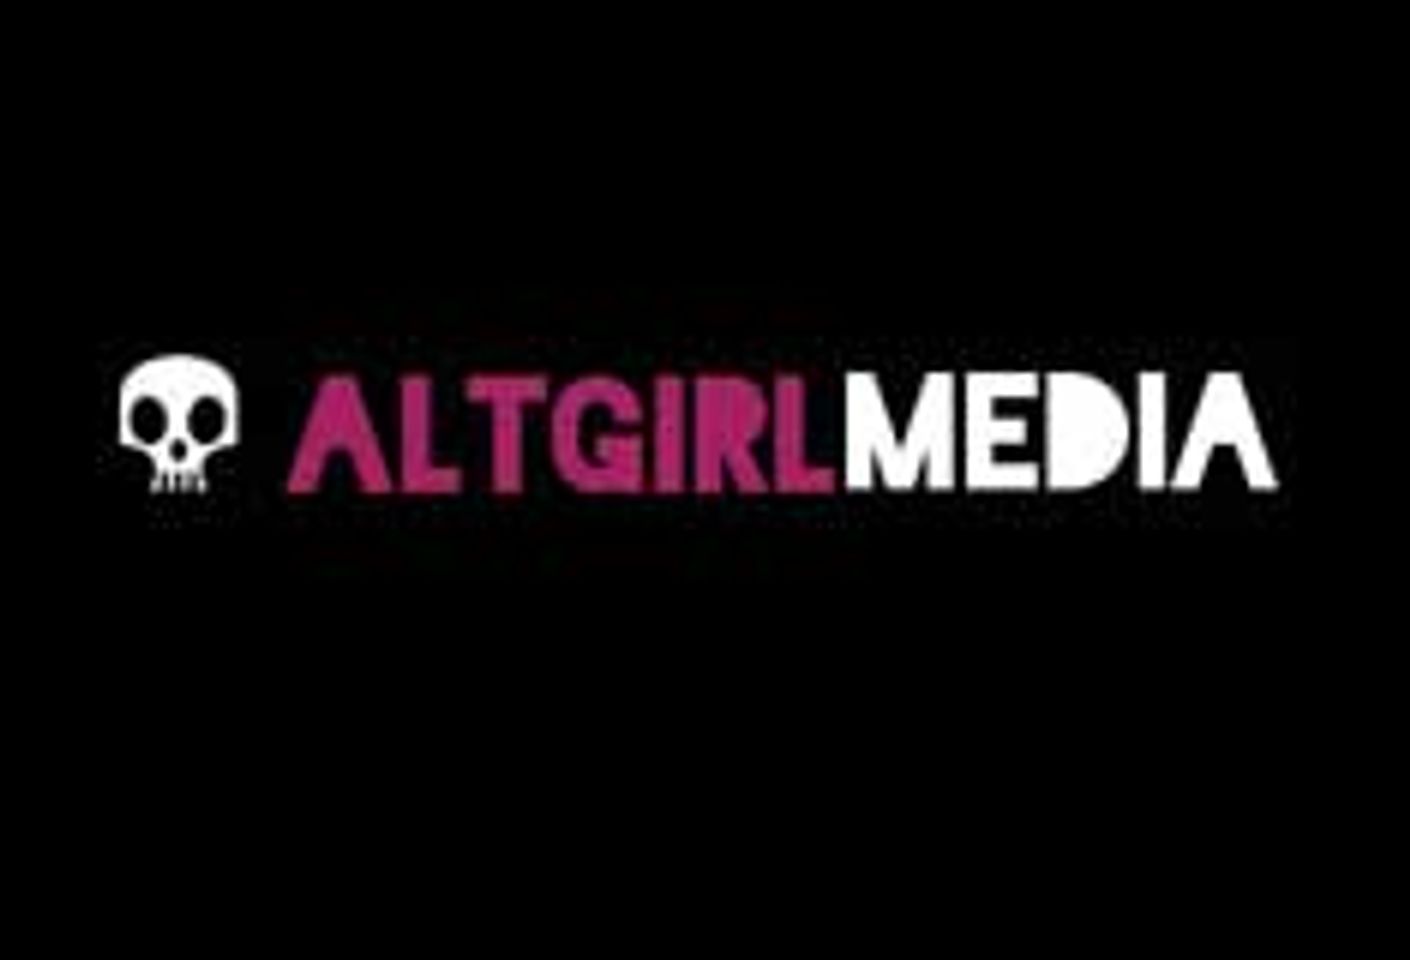 Altgirlmedia.com Offers Web Design for Alternative Models